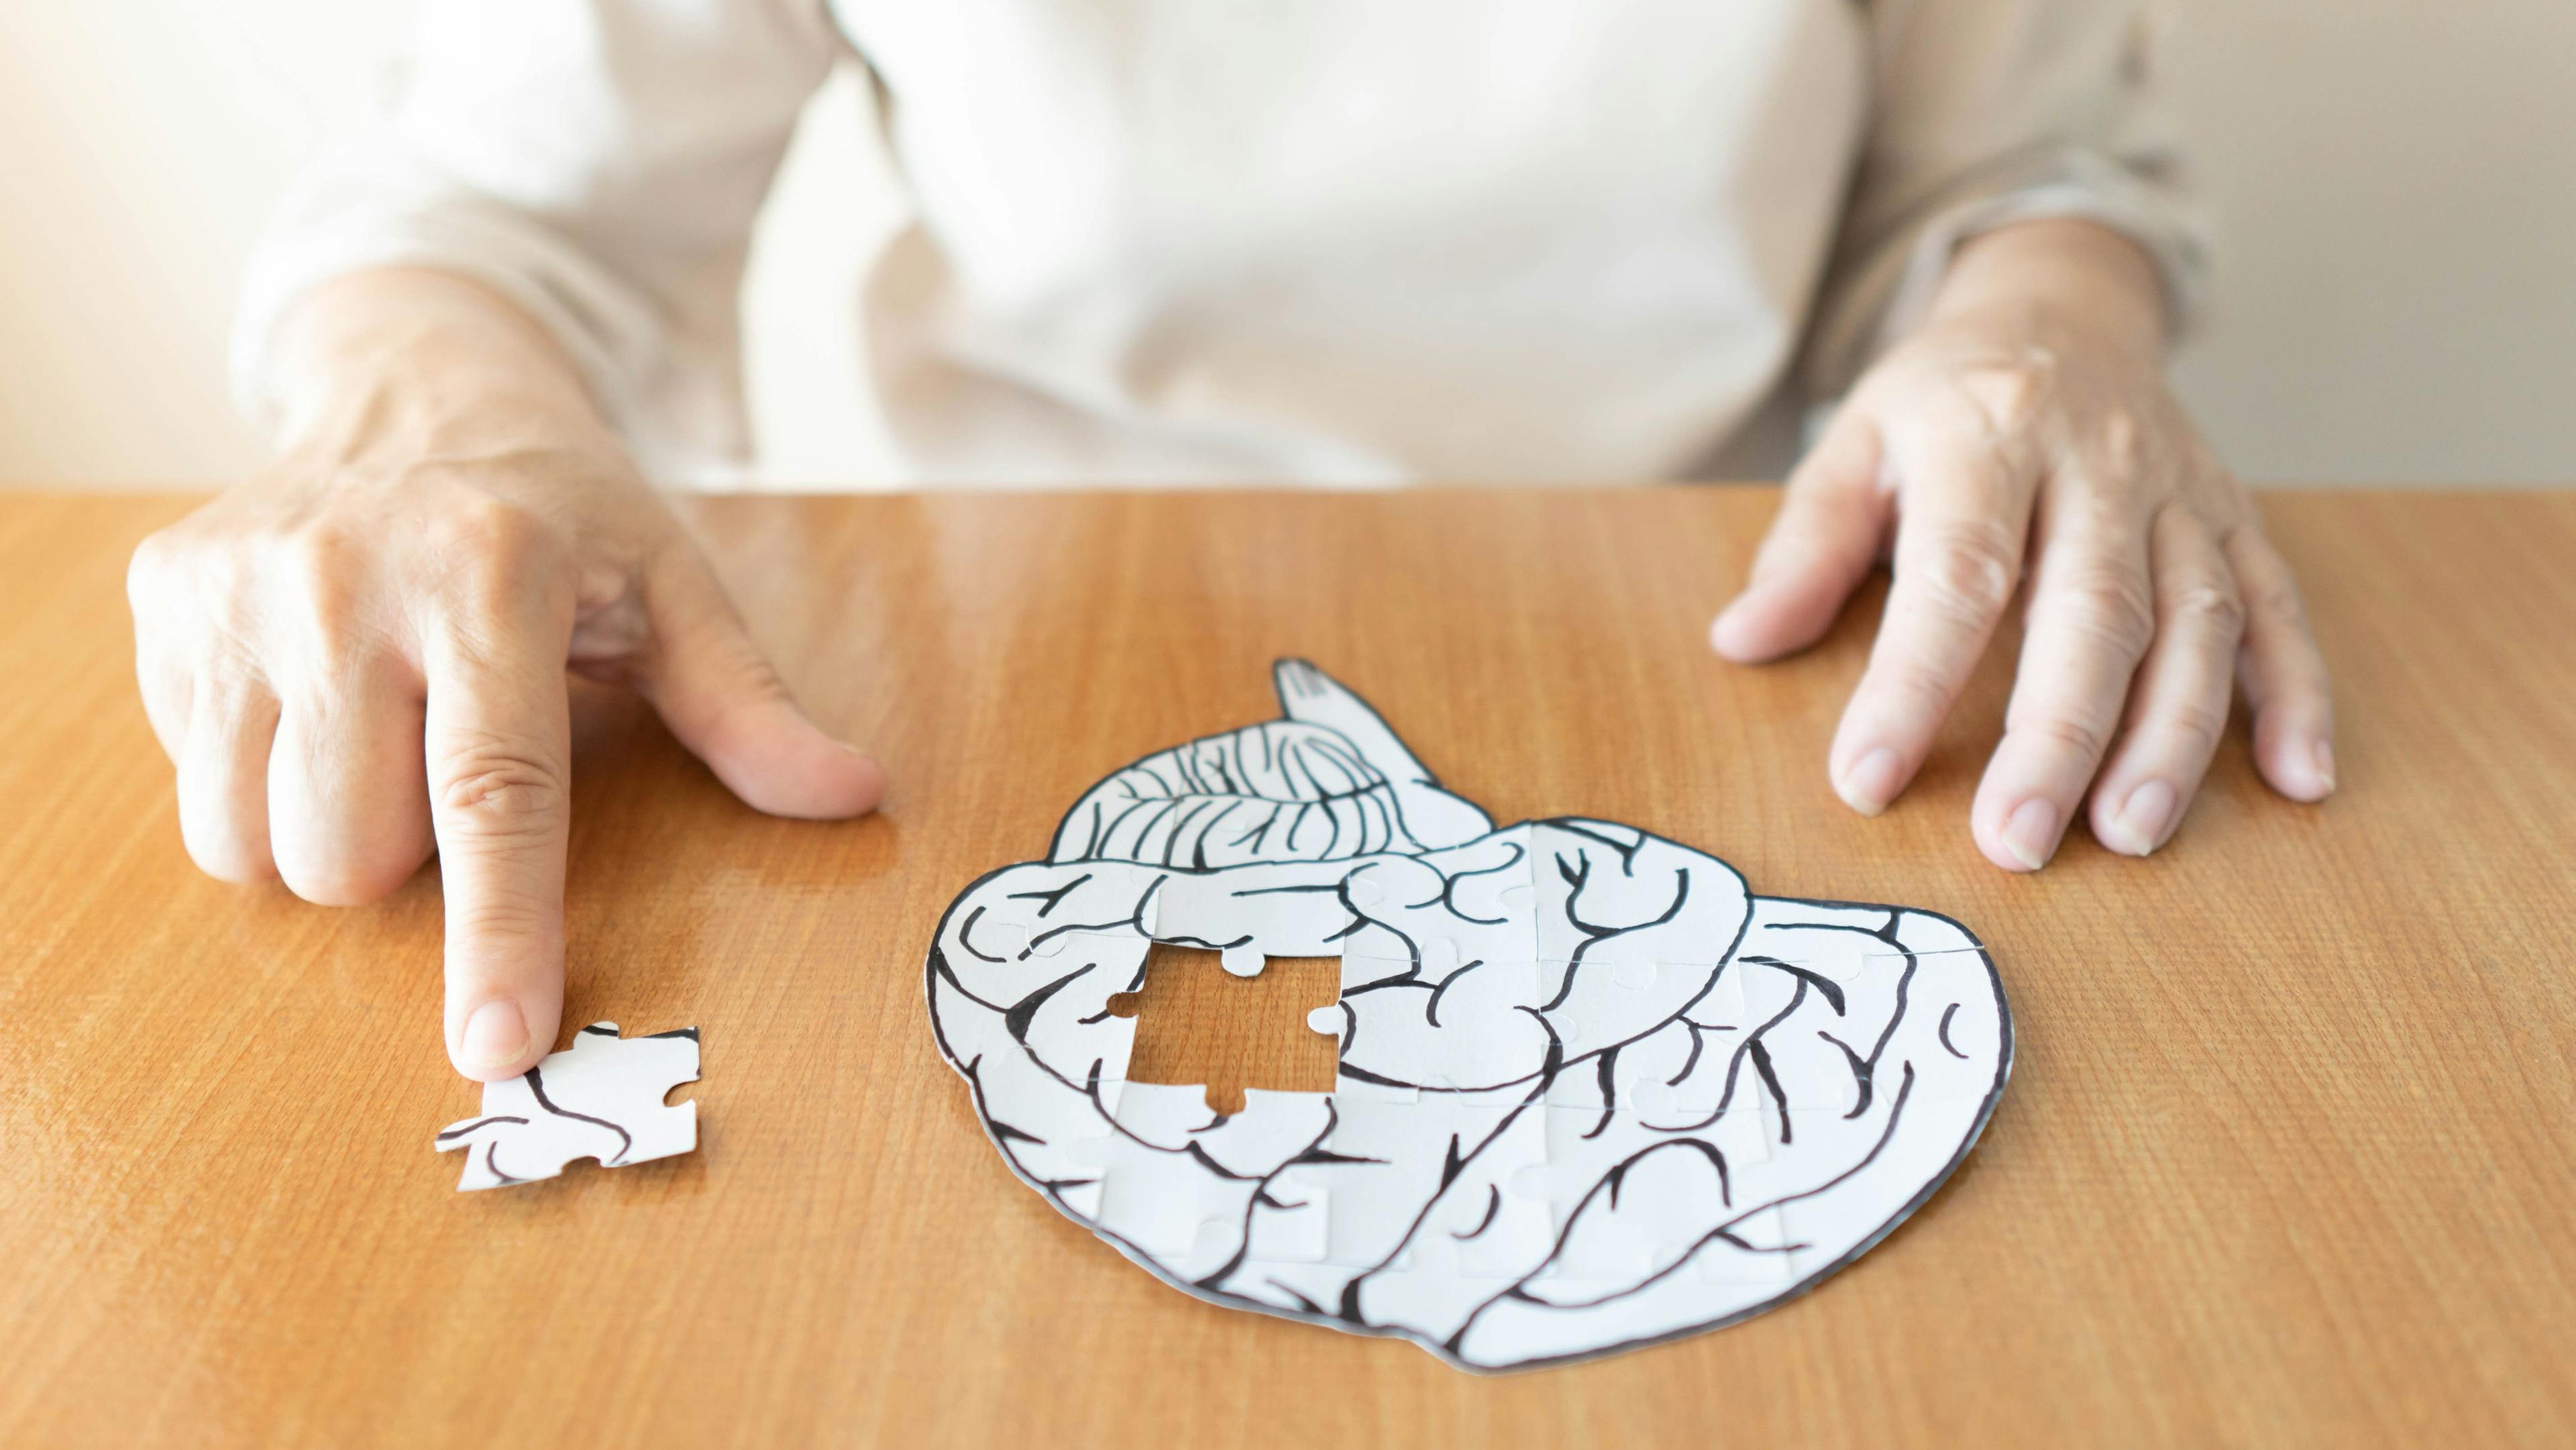 Alzheimer illustration | Image credit: Orawan - stock.adobe.com